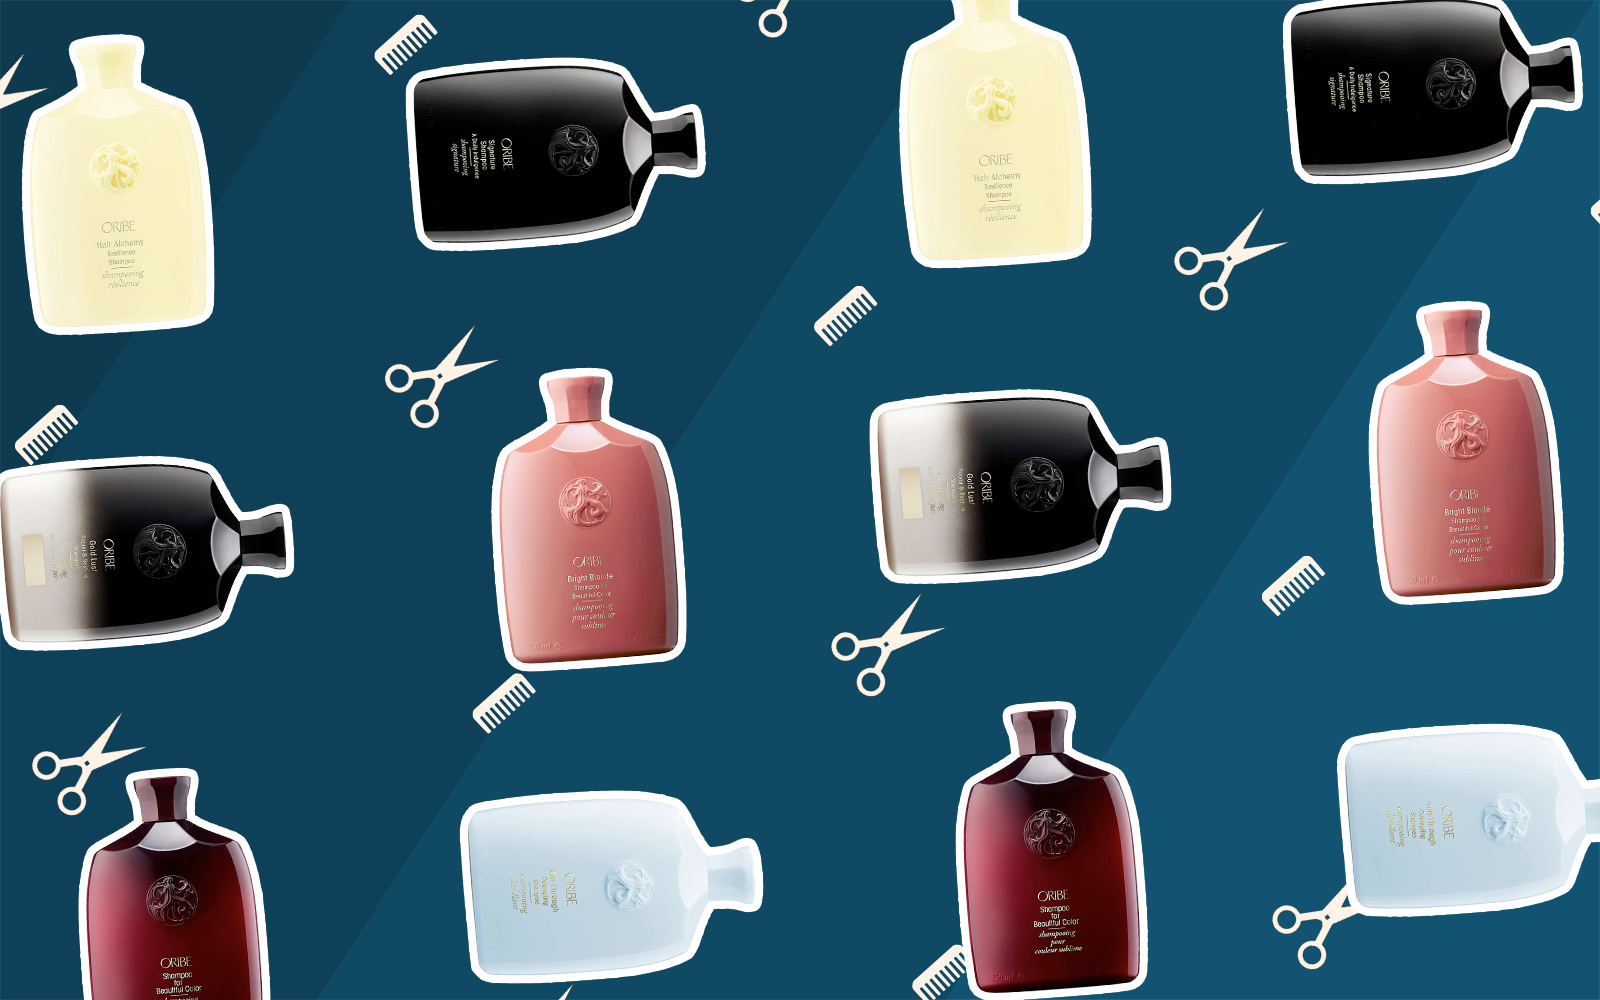 Oribe Shampoo Reviews | Worth the Splurge? | Our No-B.S. Take